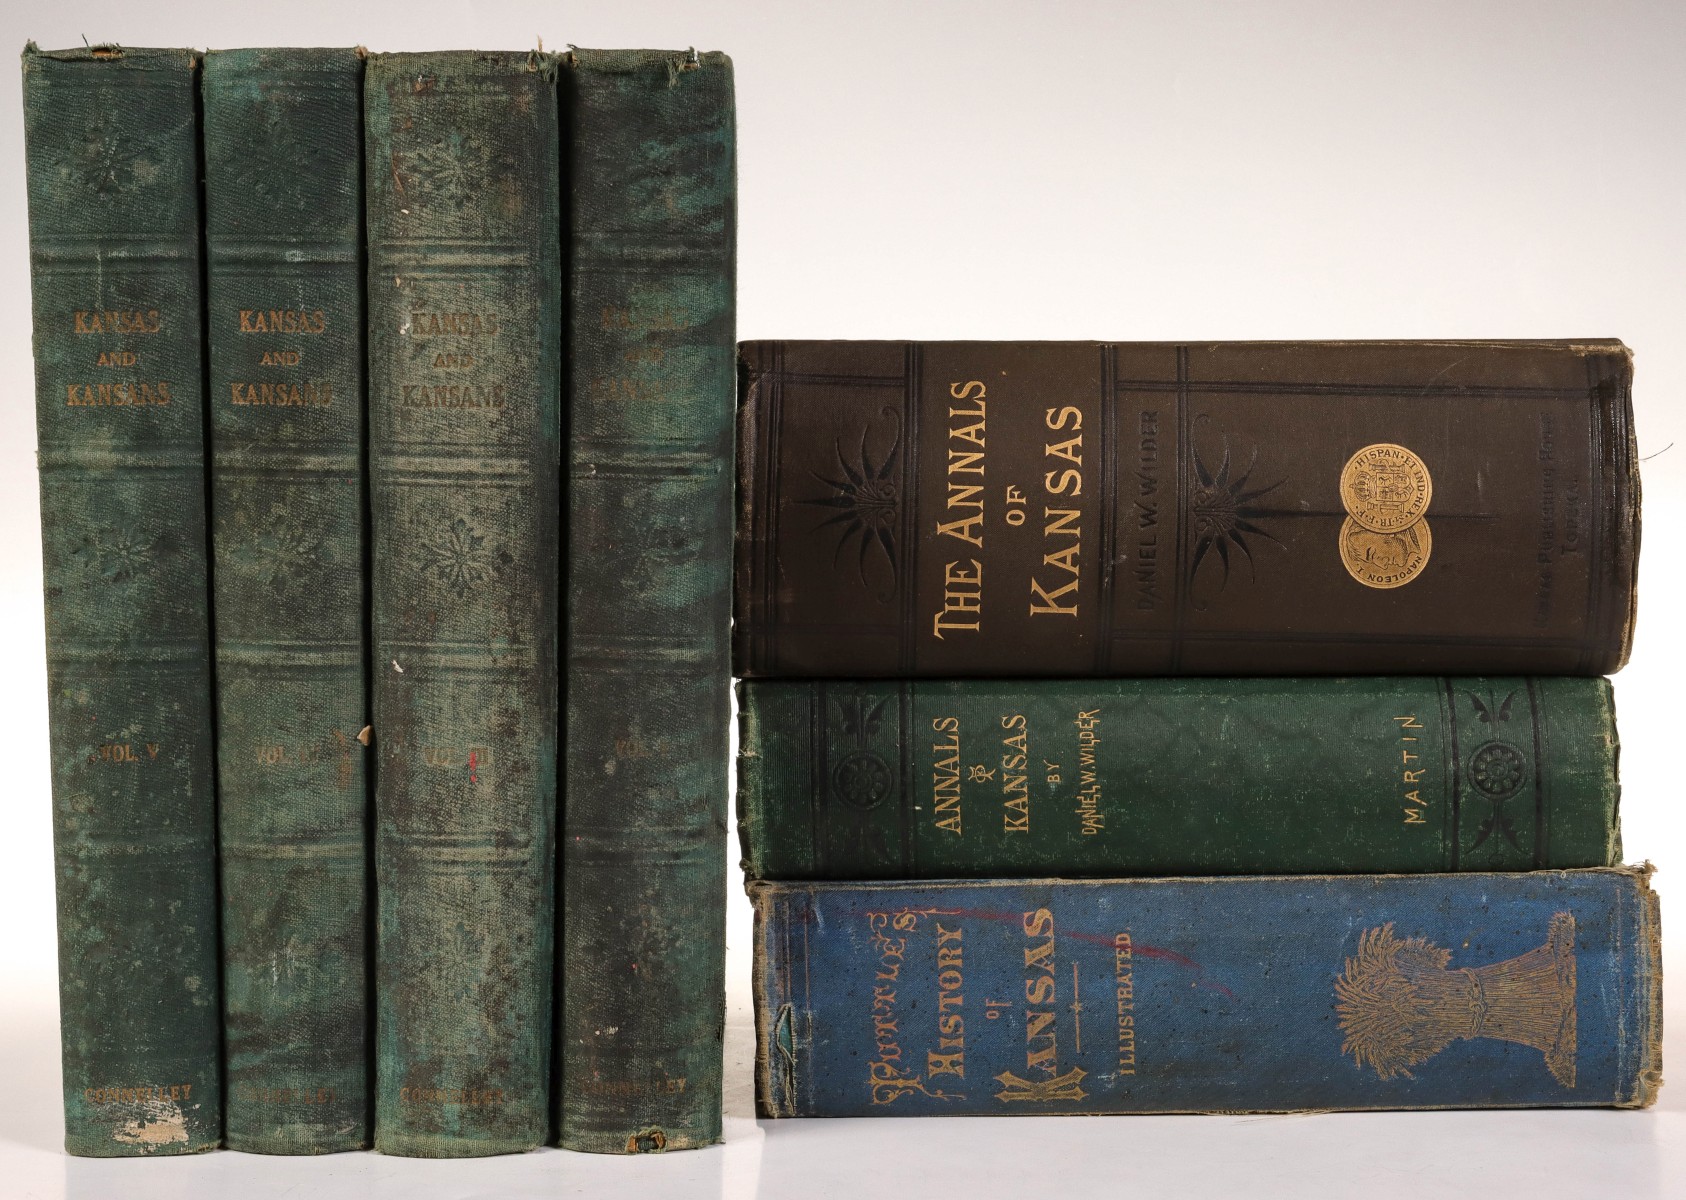 1870s VOLUMES AND BOOK SETS ON KANSAS HISTORY